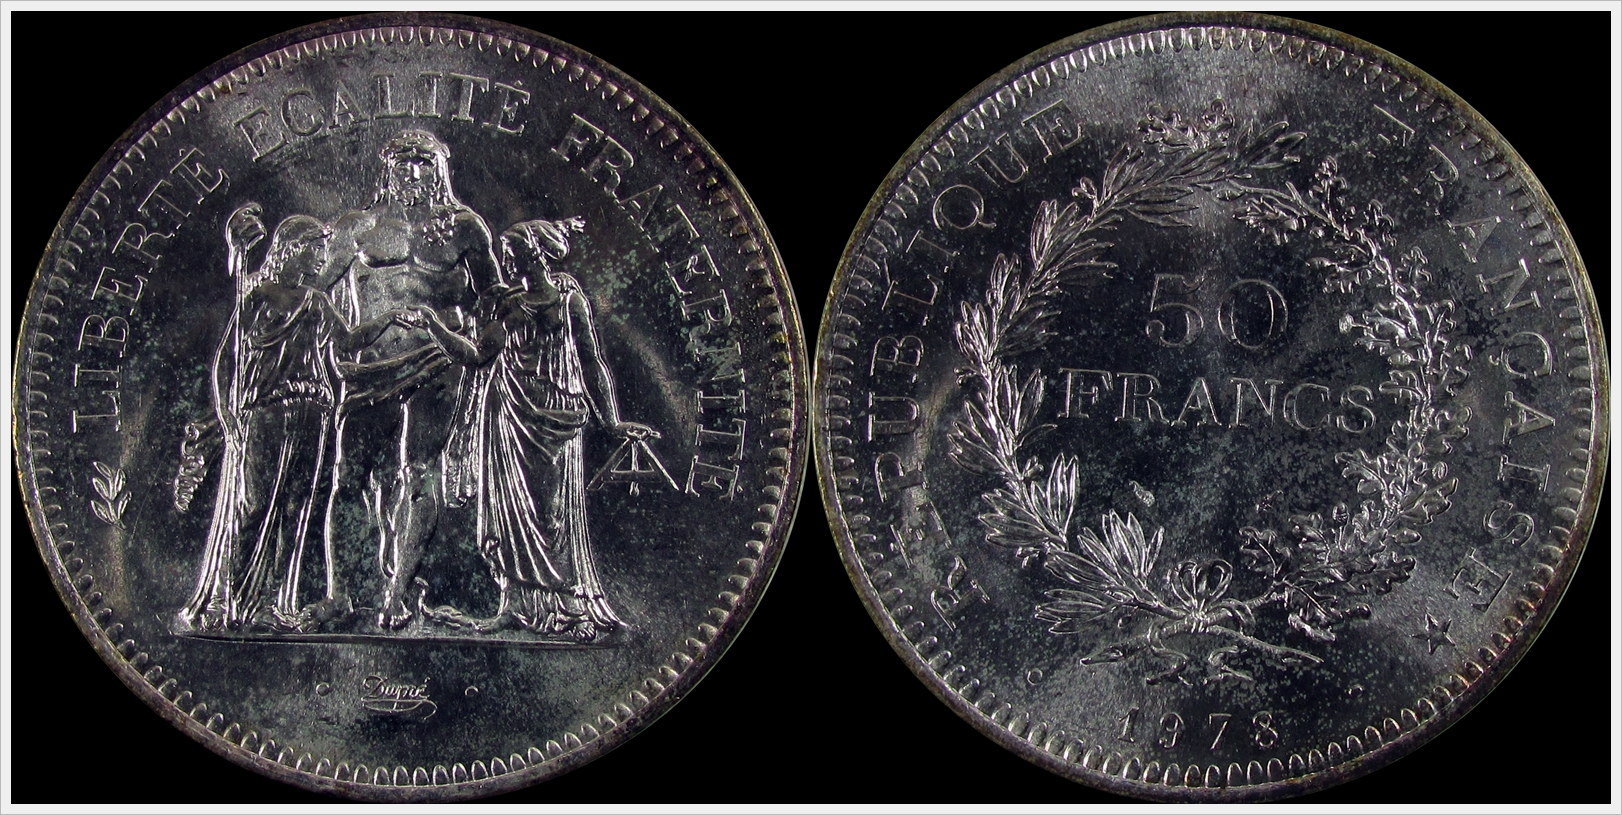 France 1978 50 Francs.jpg